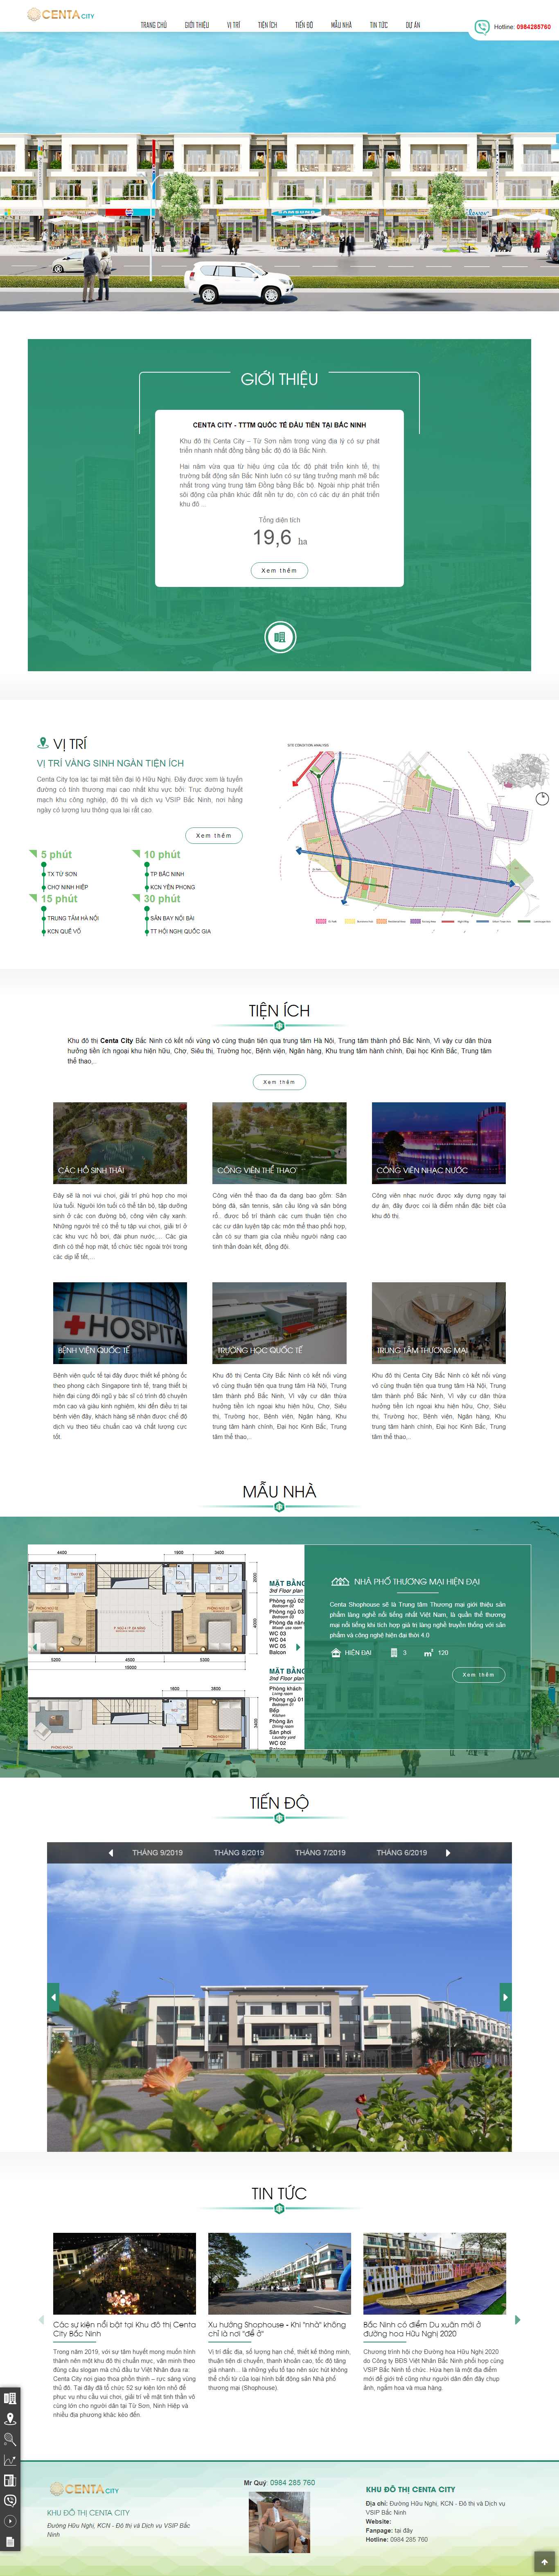 Thiết kế Website dự án bds - khudothivsip.vn